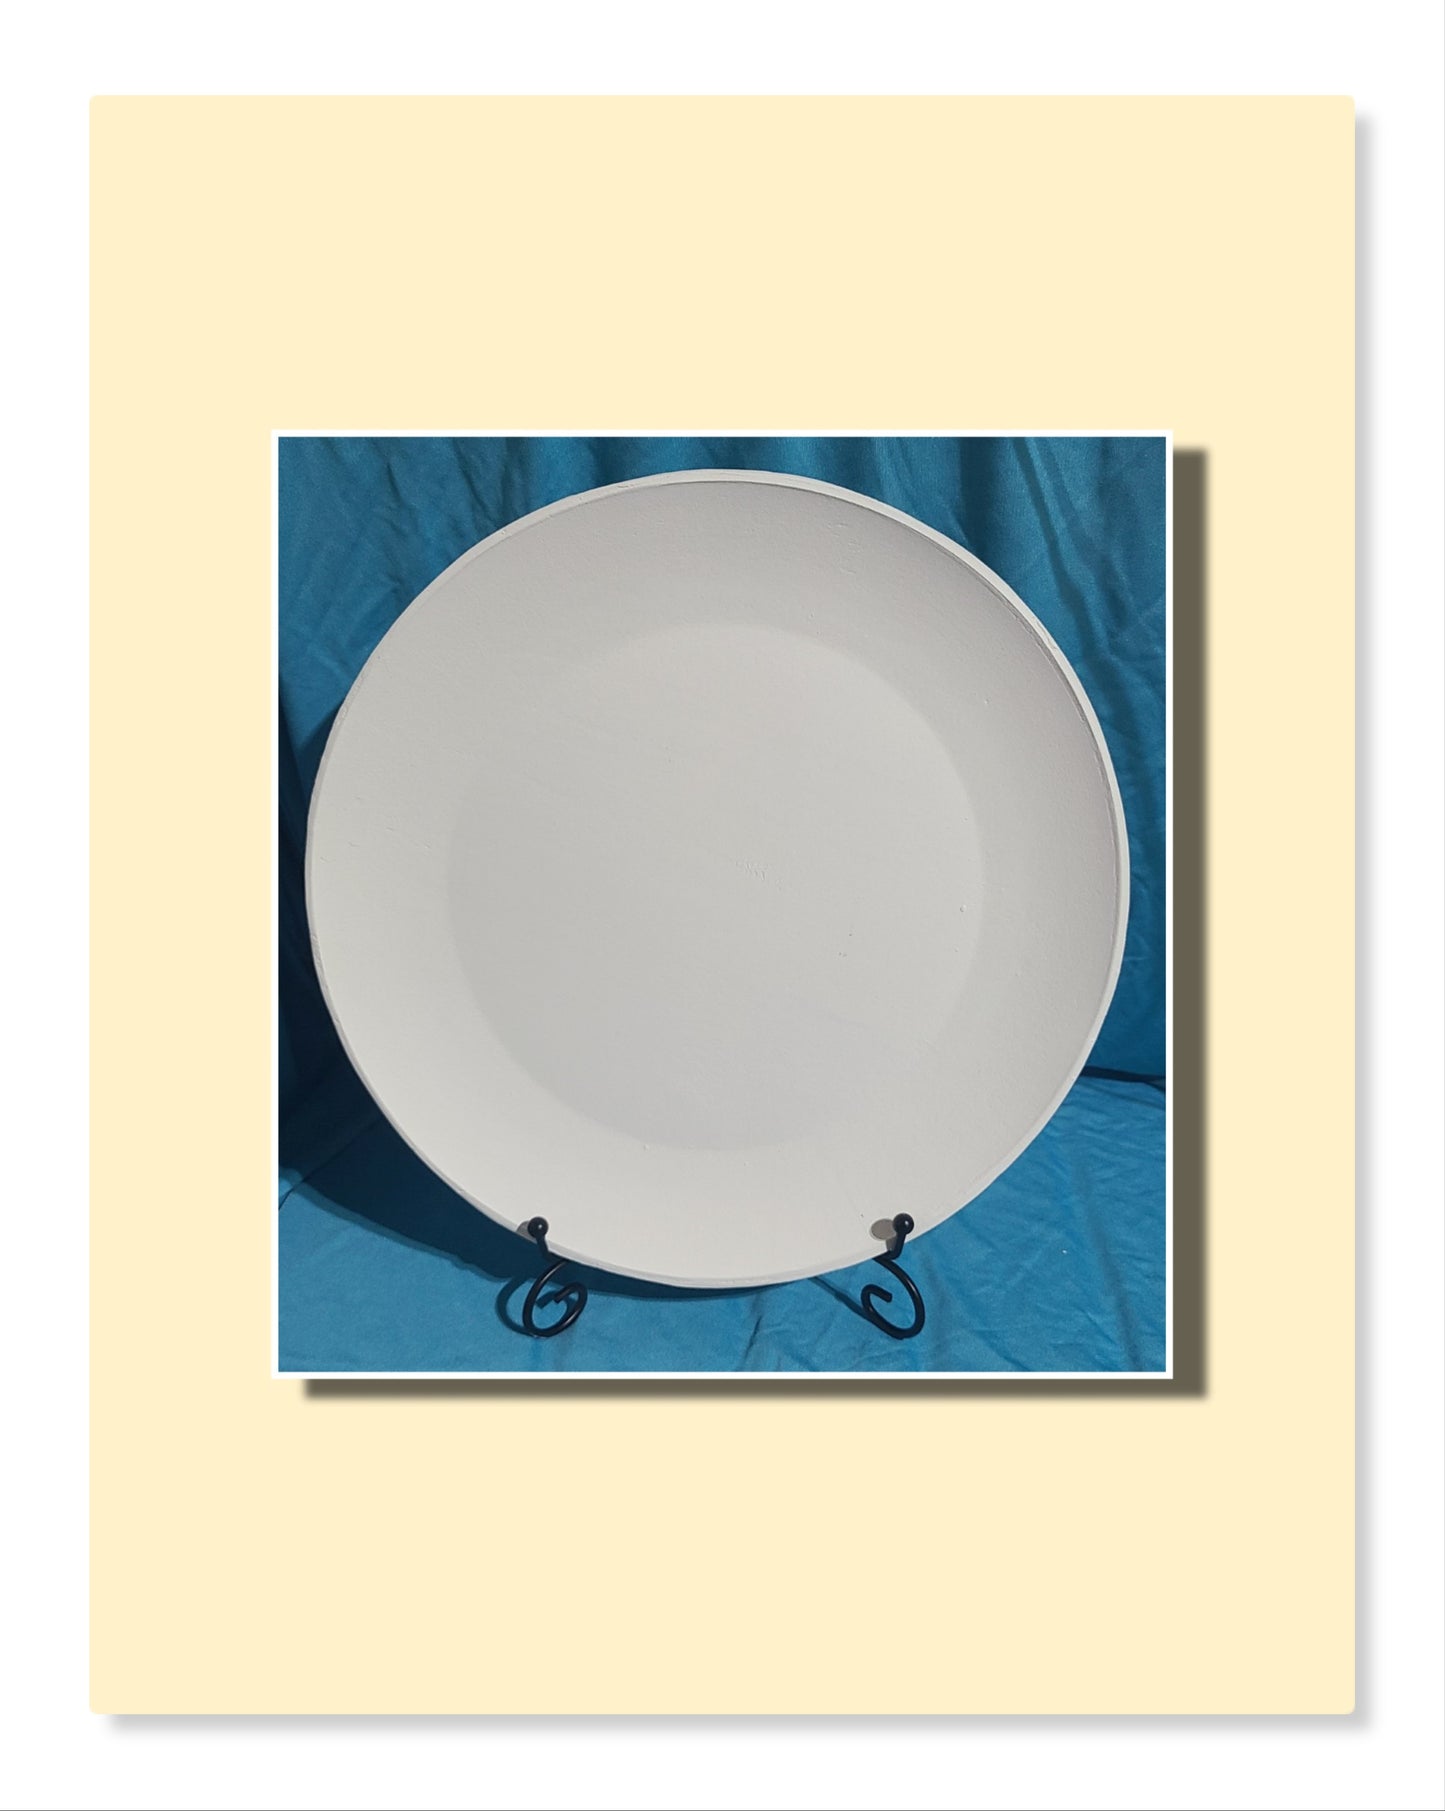 Dinnerware - large plate